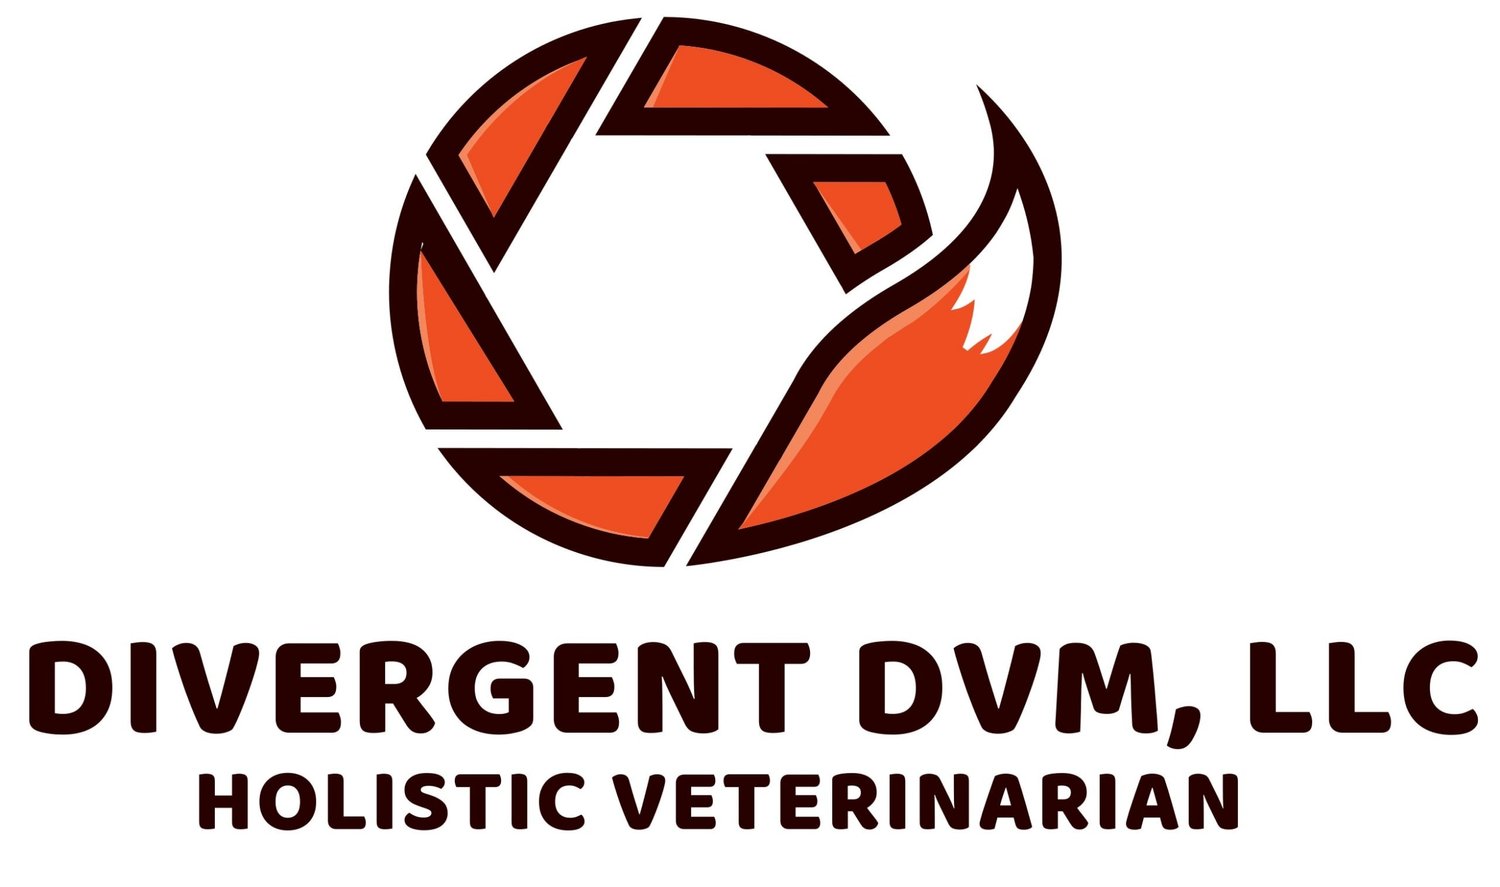 Divergent DVM, LLC